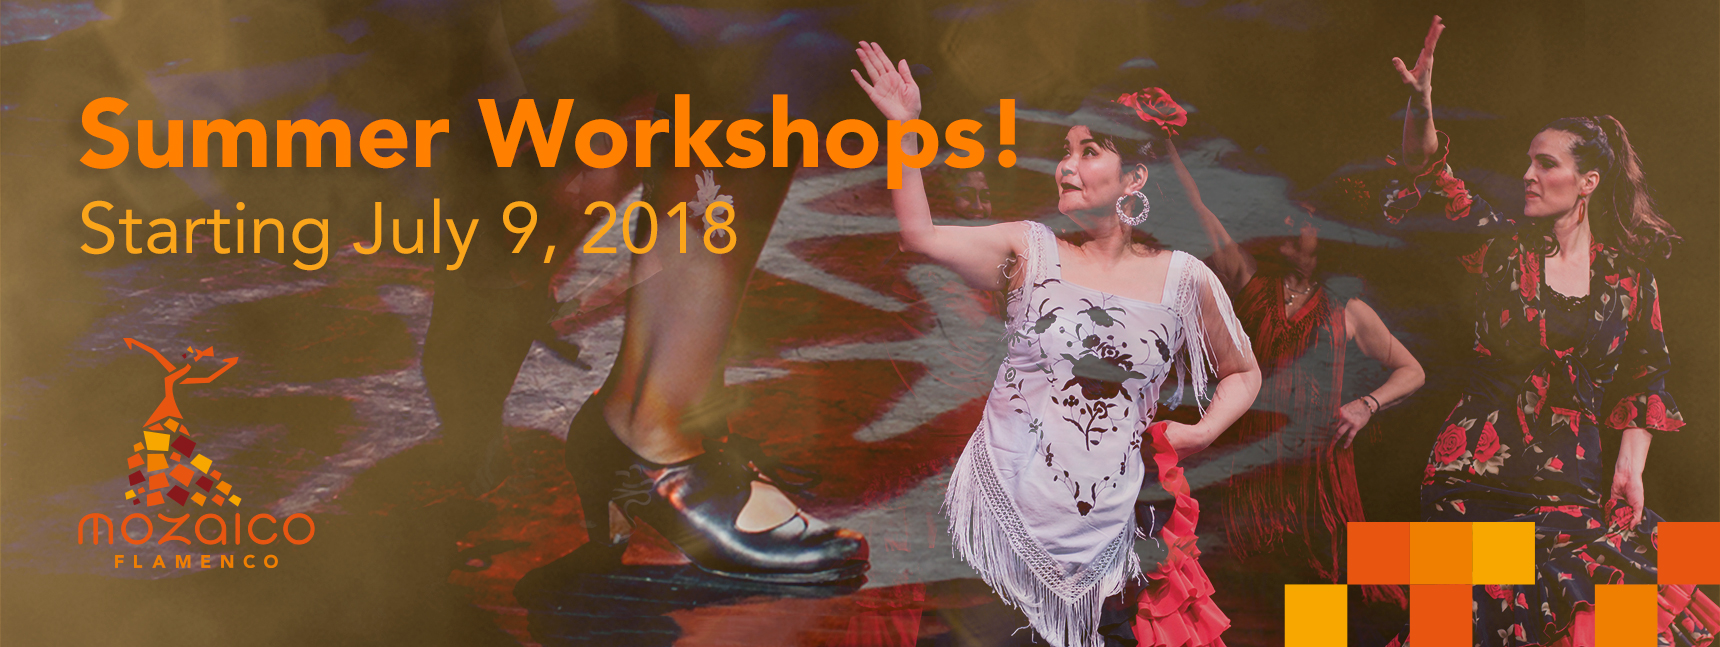 Mozaico Flamenco Summer 2018 Workshops